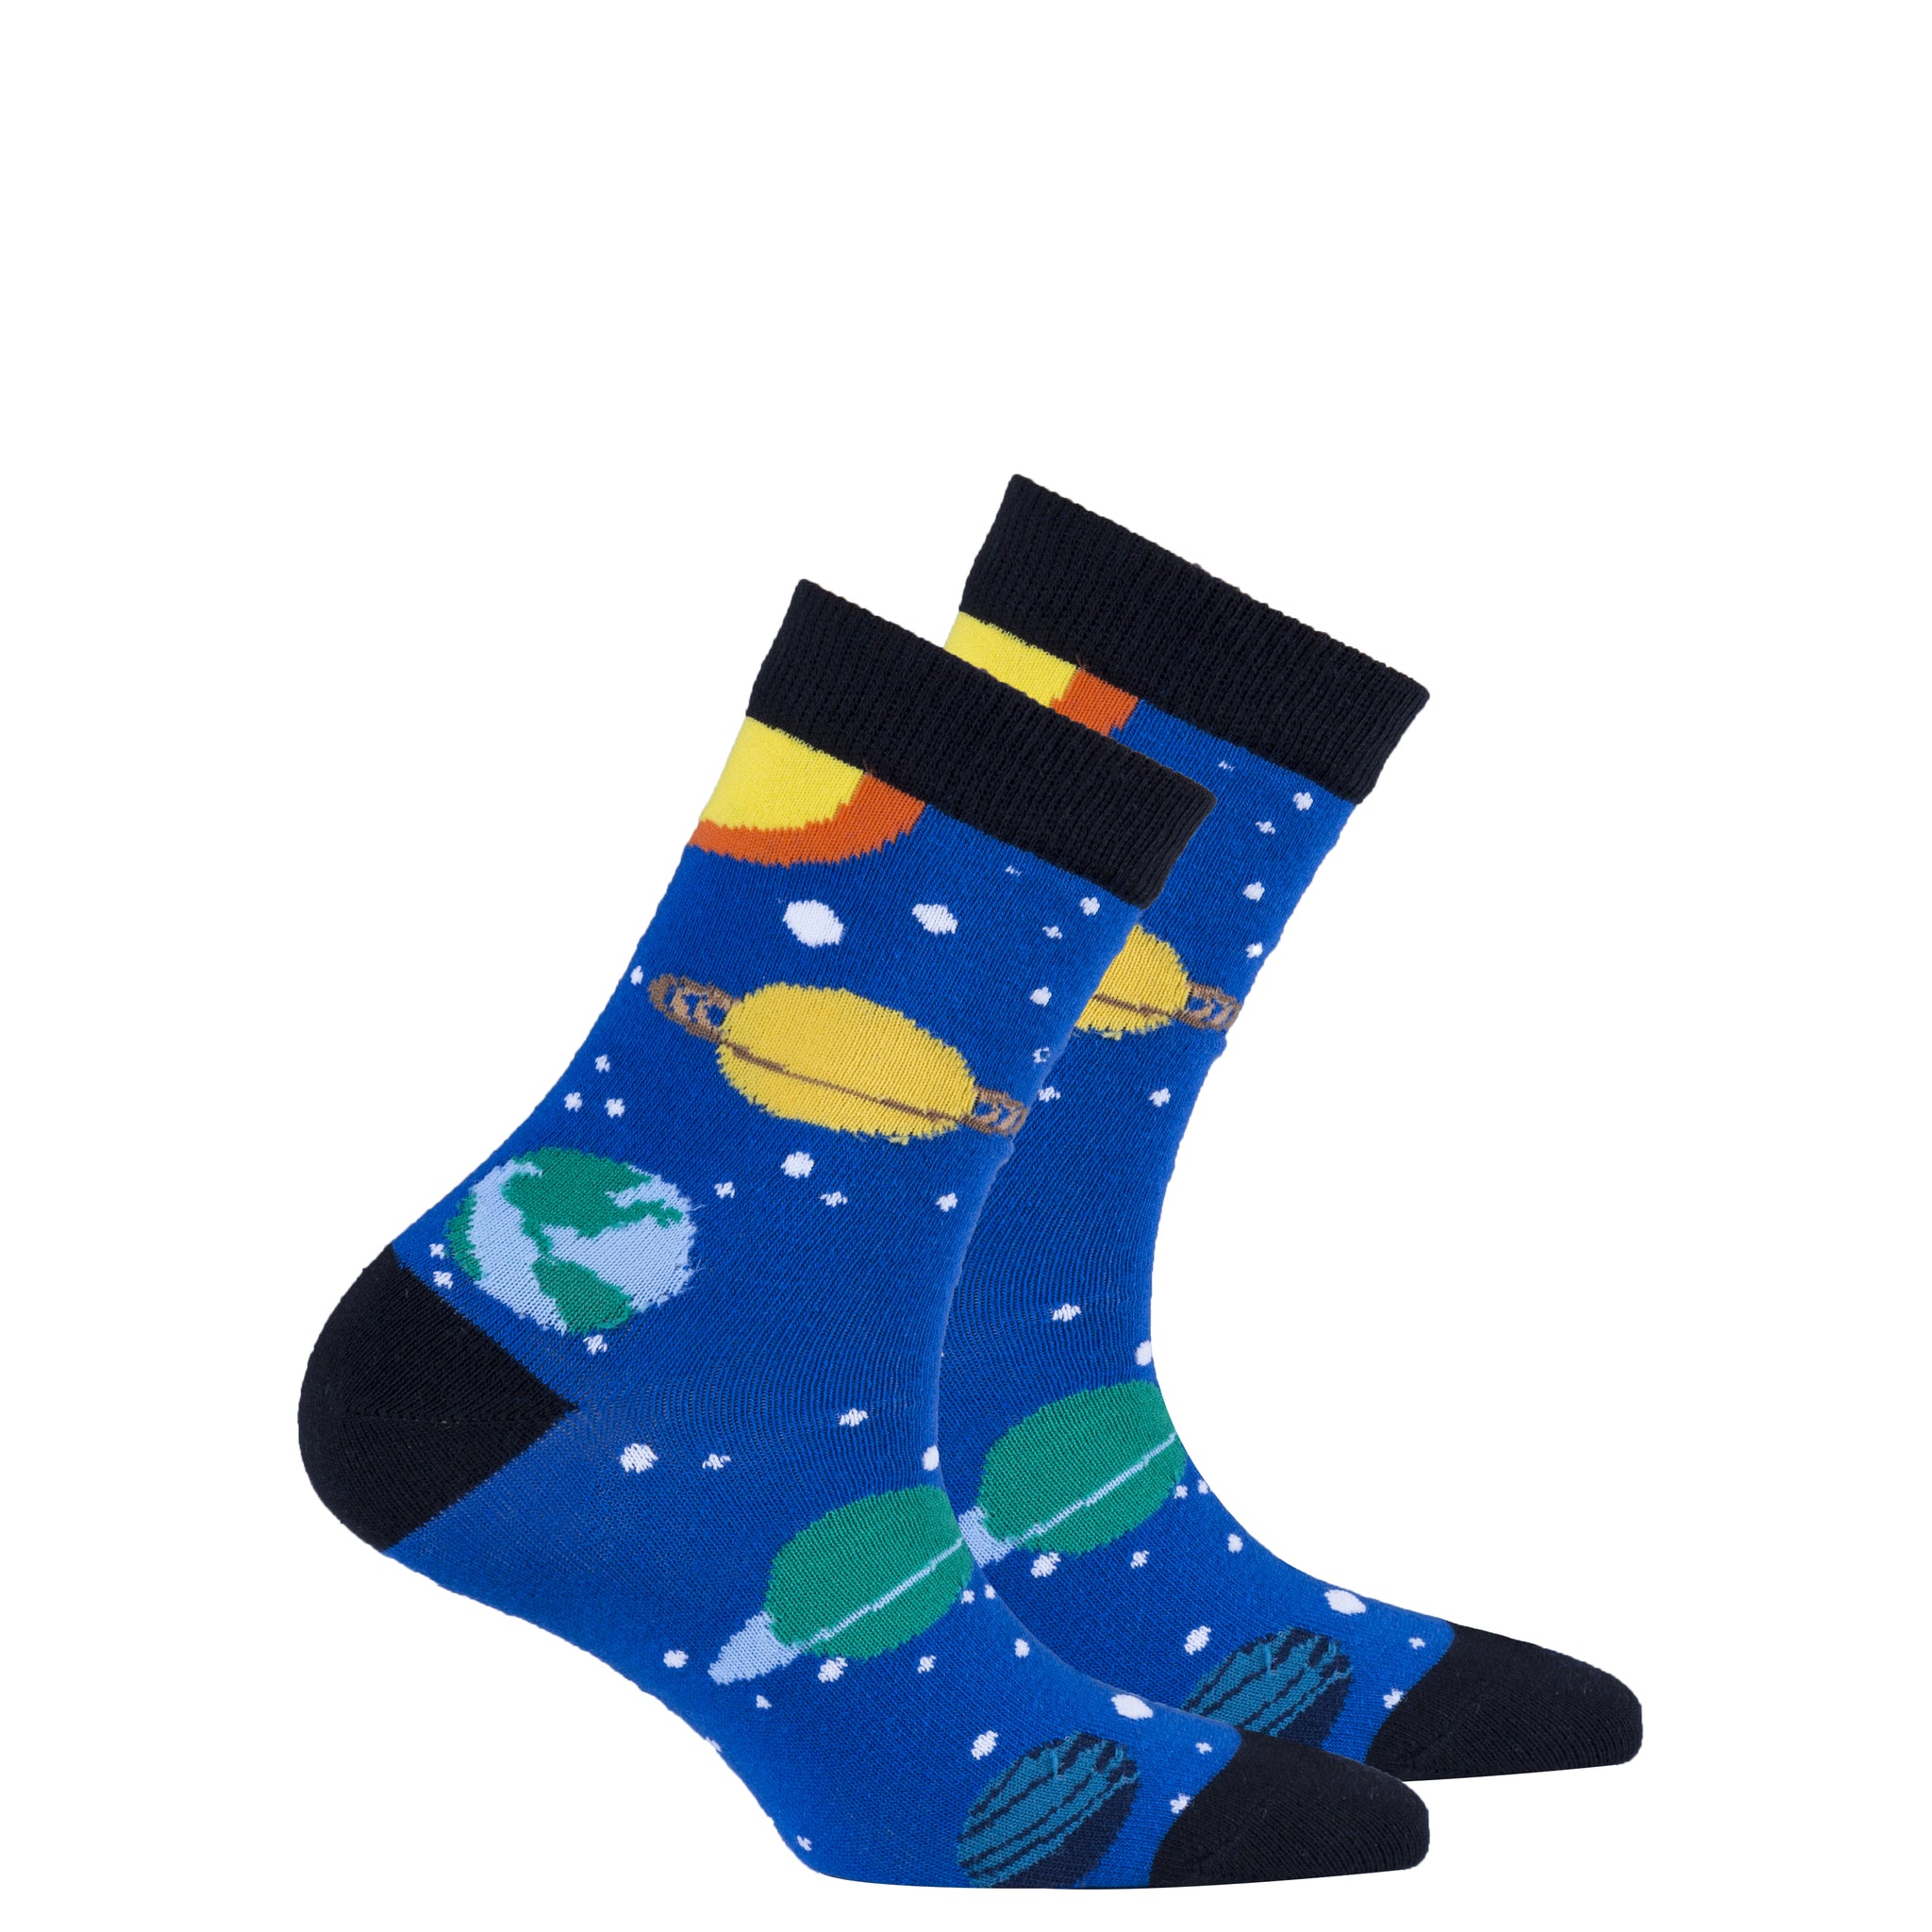 Kids Universe Socks